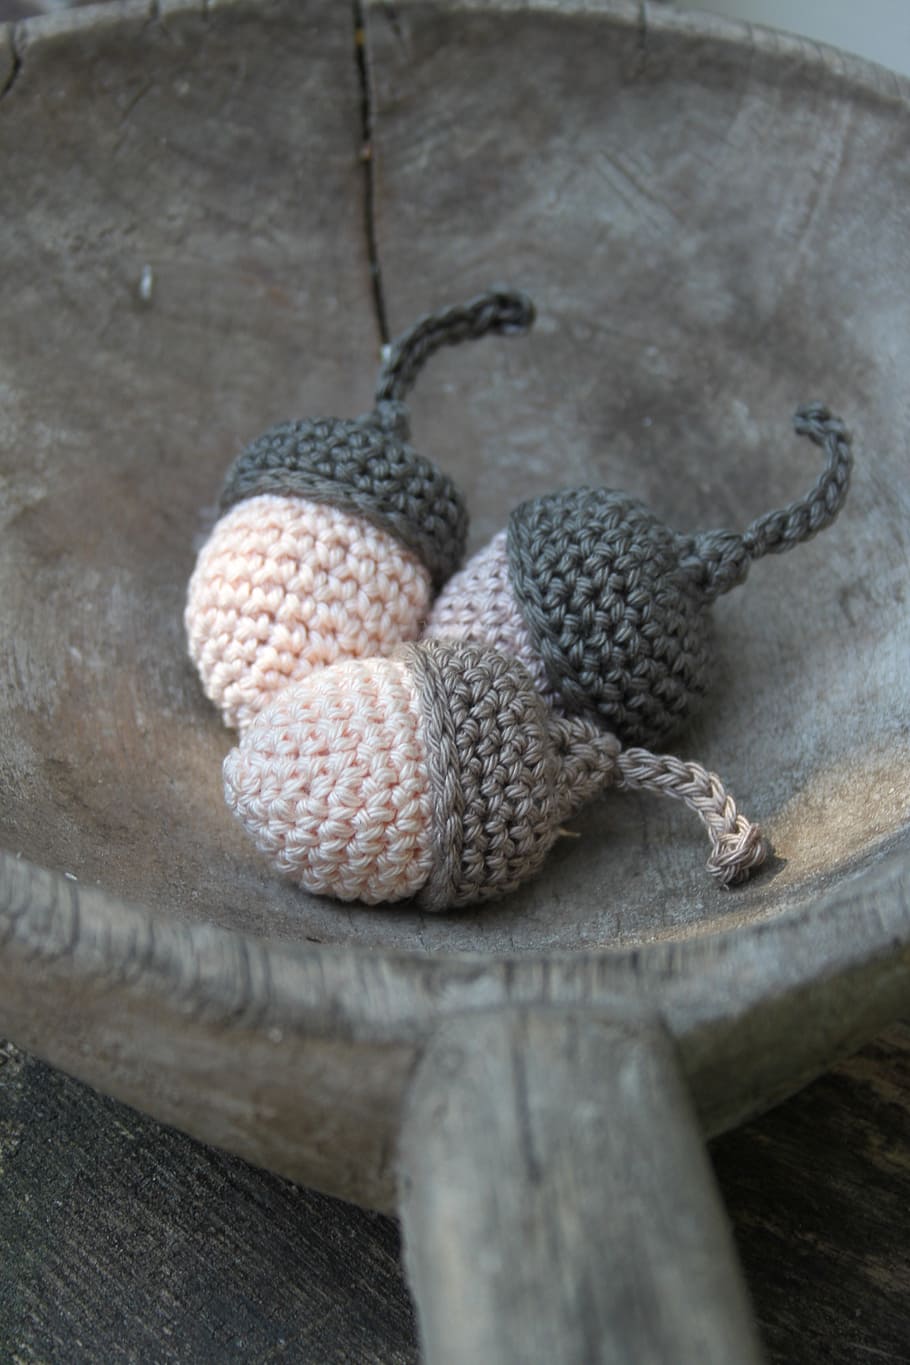 acorn, hooks, crochet, old wooden scoop, crochet acorns, brocante, wood - material, craft, art and craft, close-up